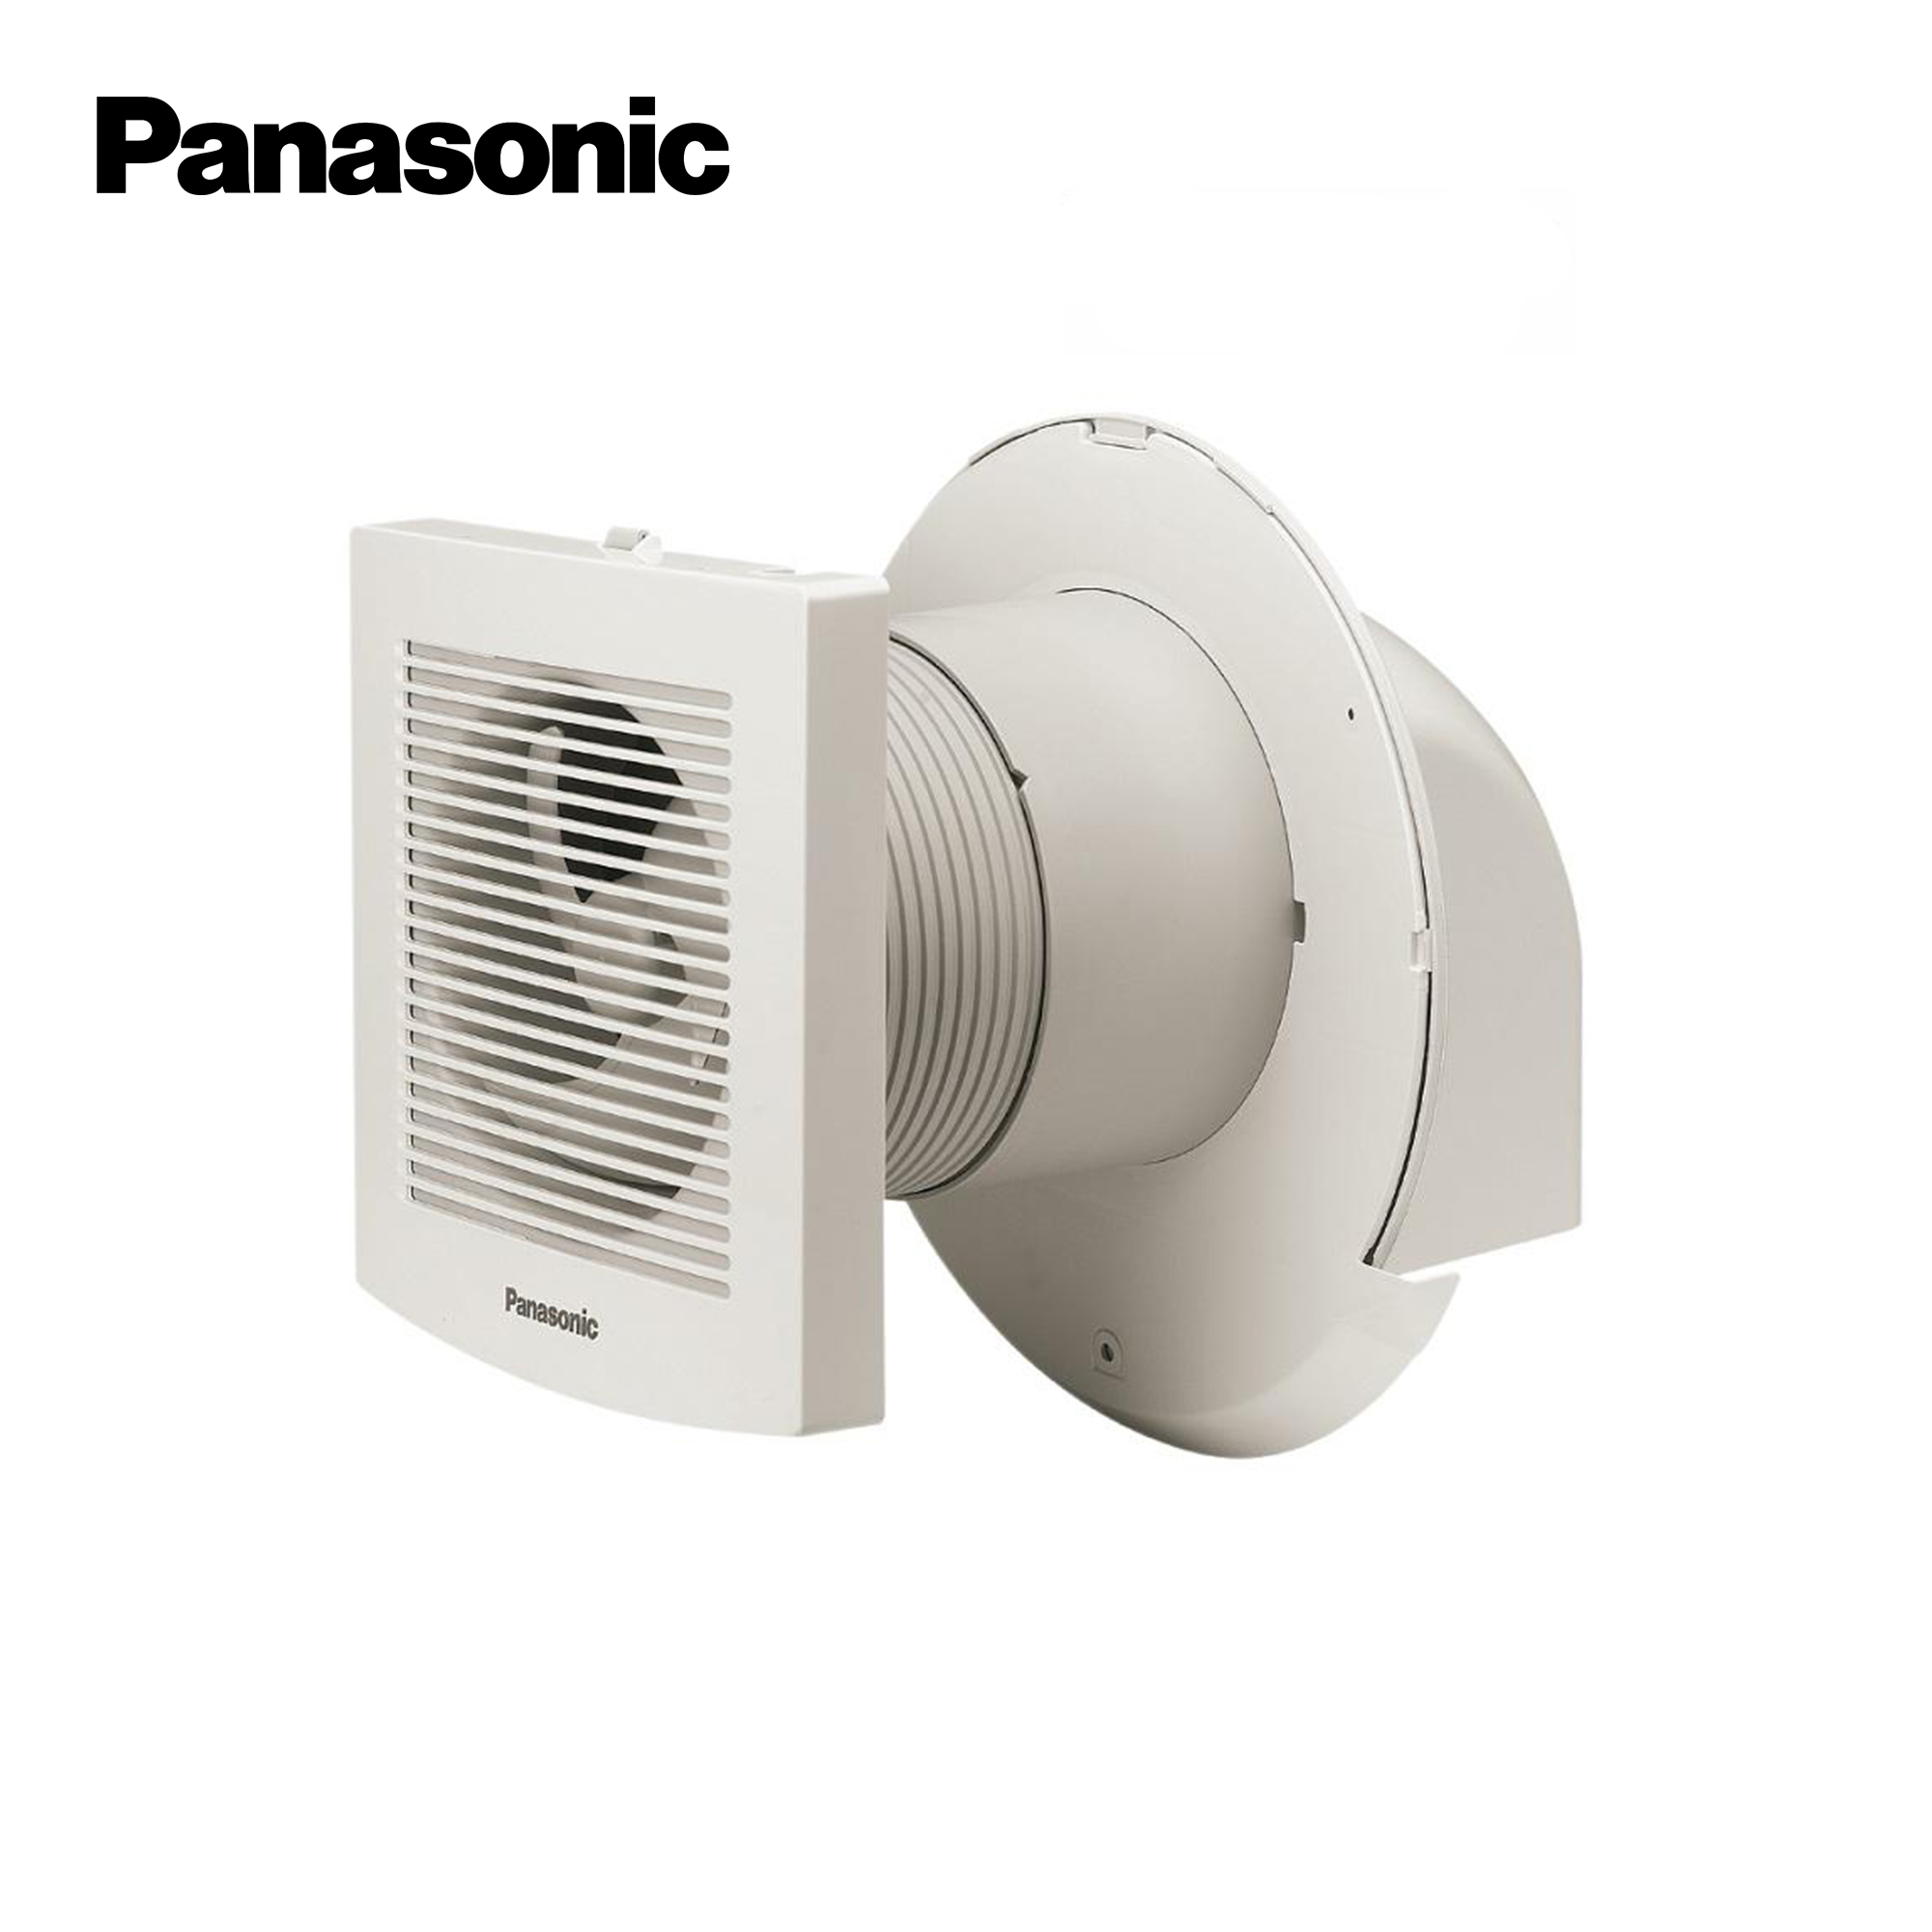 Panasonic FV-15EGS1 Wall Suction Exhaust Fan | shopbrills.com